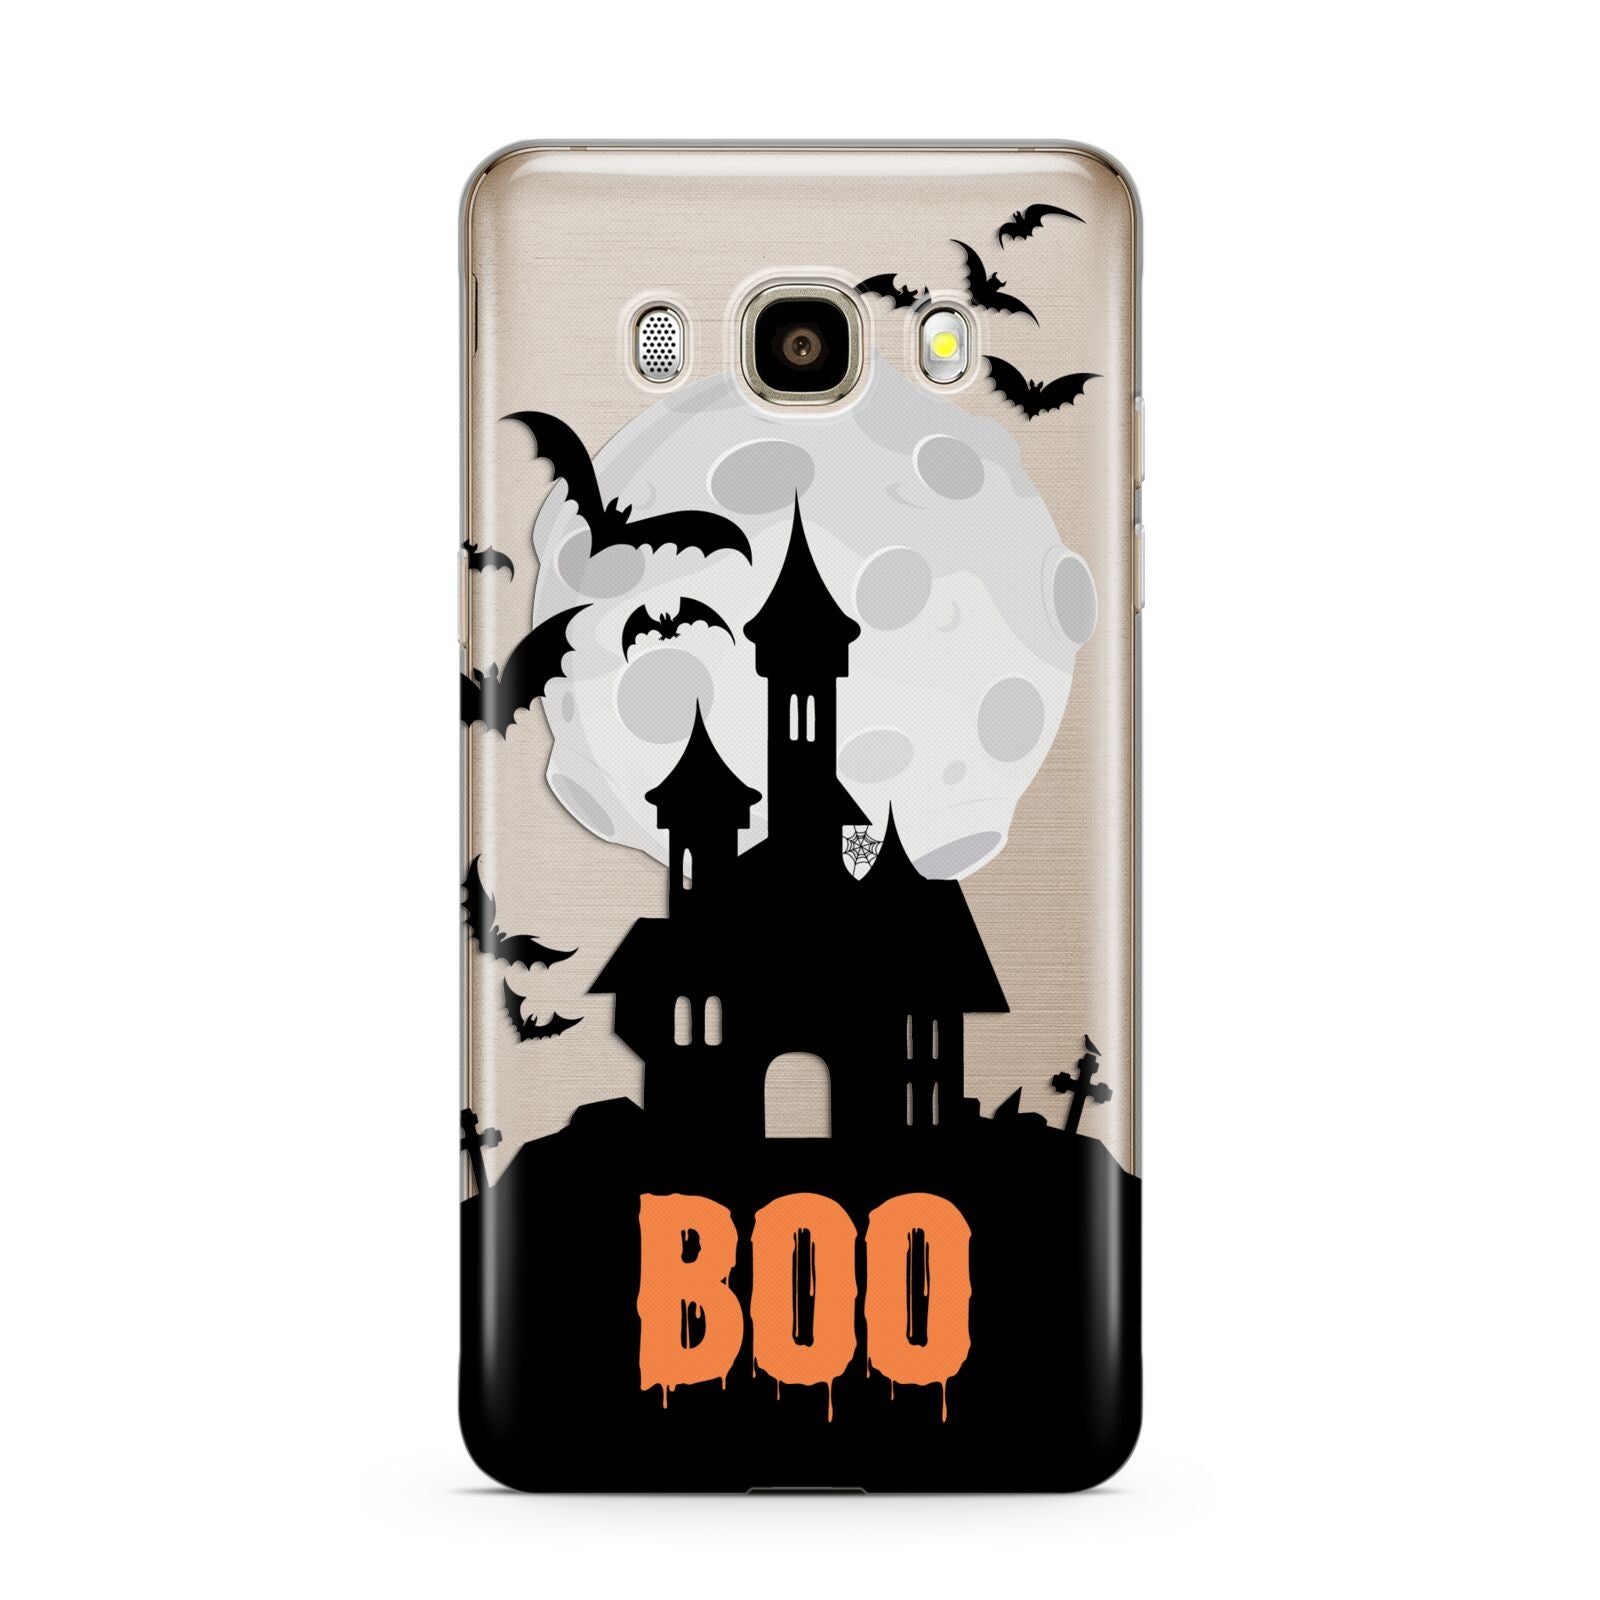 Boo Gothic Black Halloween Samsung Galaxy J7 2016 Case on gold phone